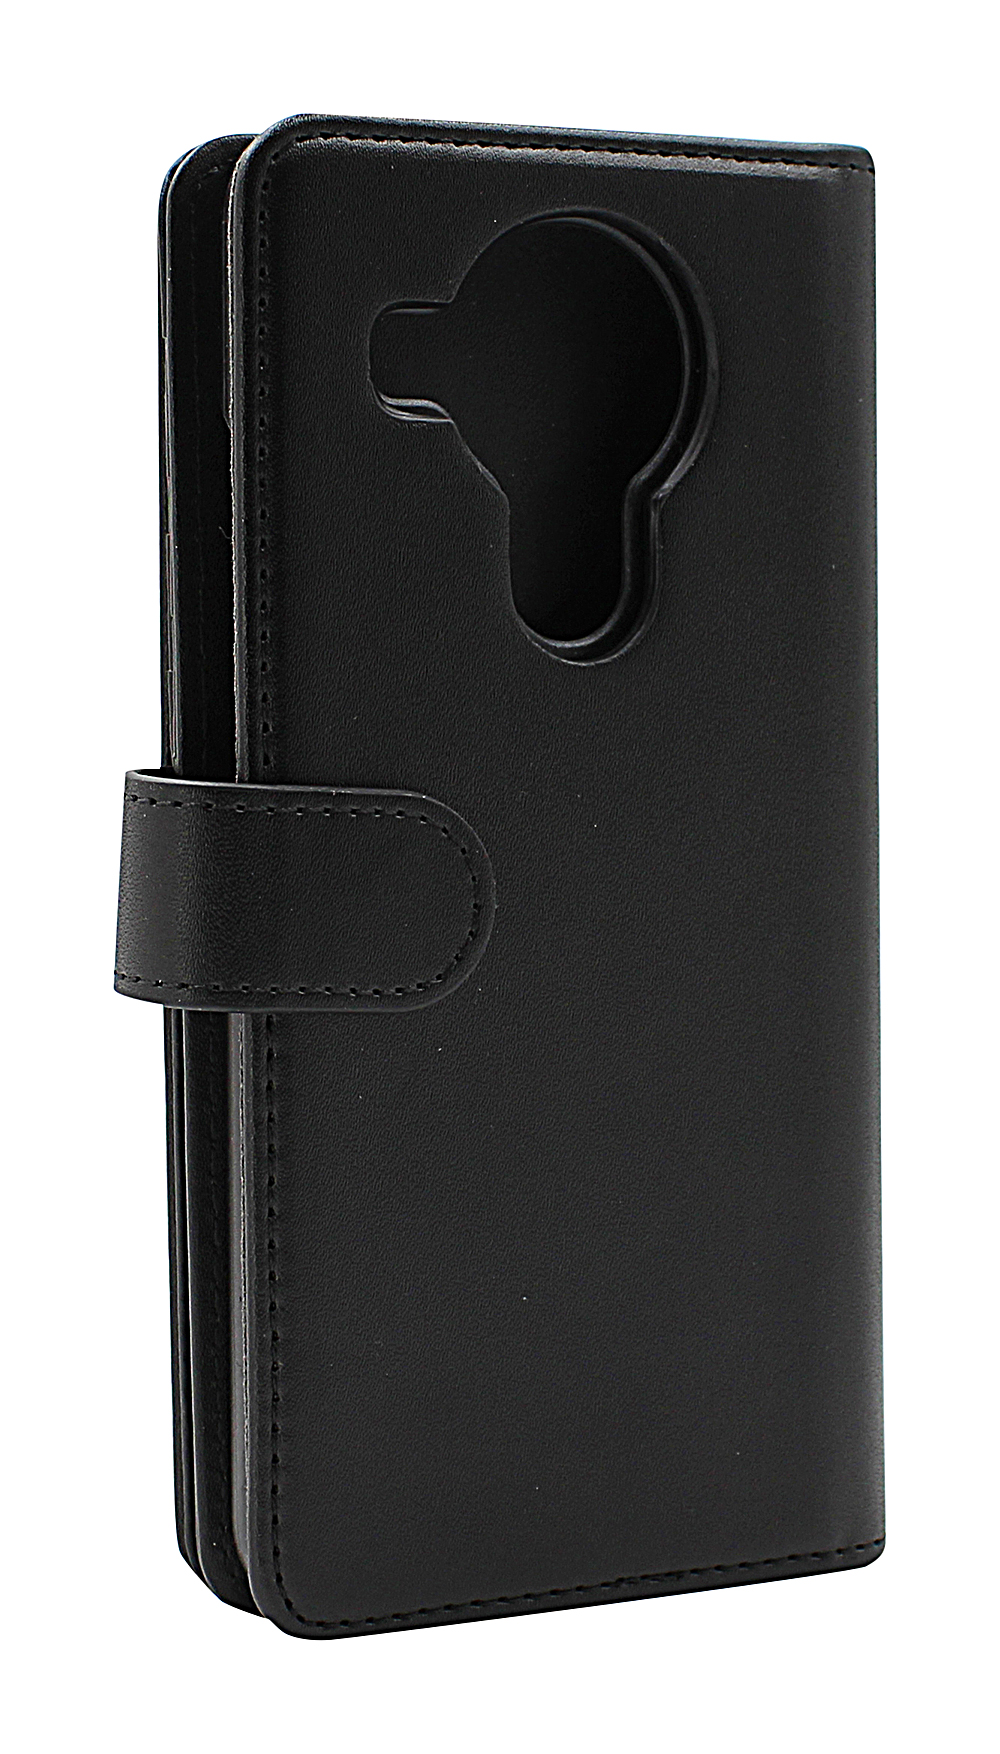 CoverInSkimblocker XL Wallet Nokia 5.4